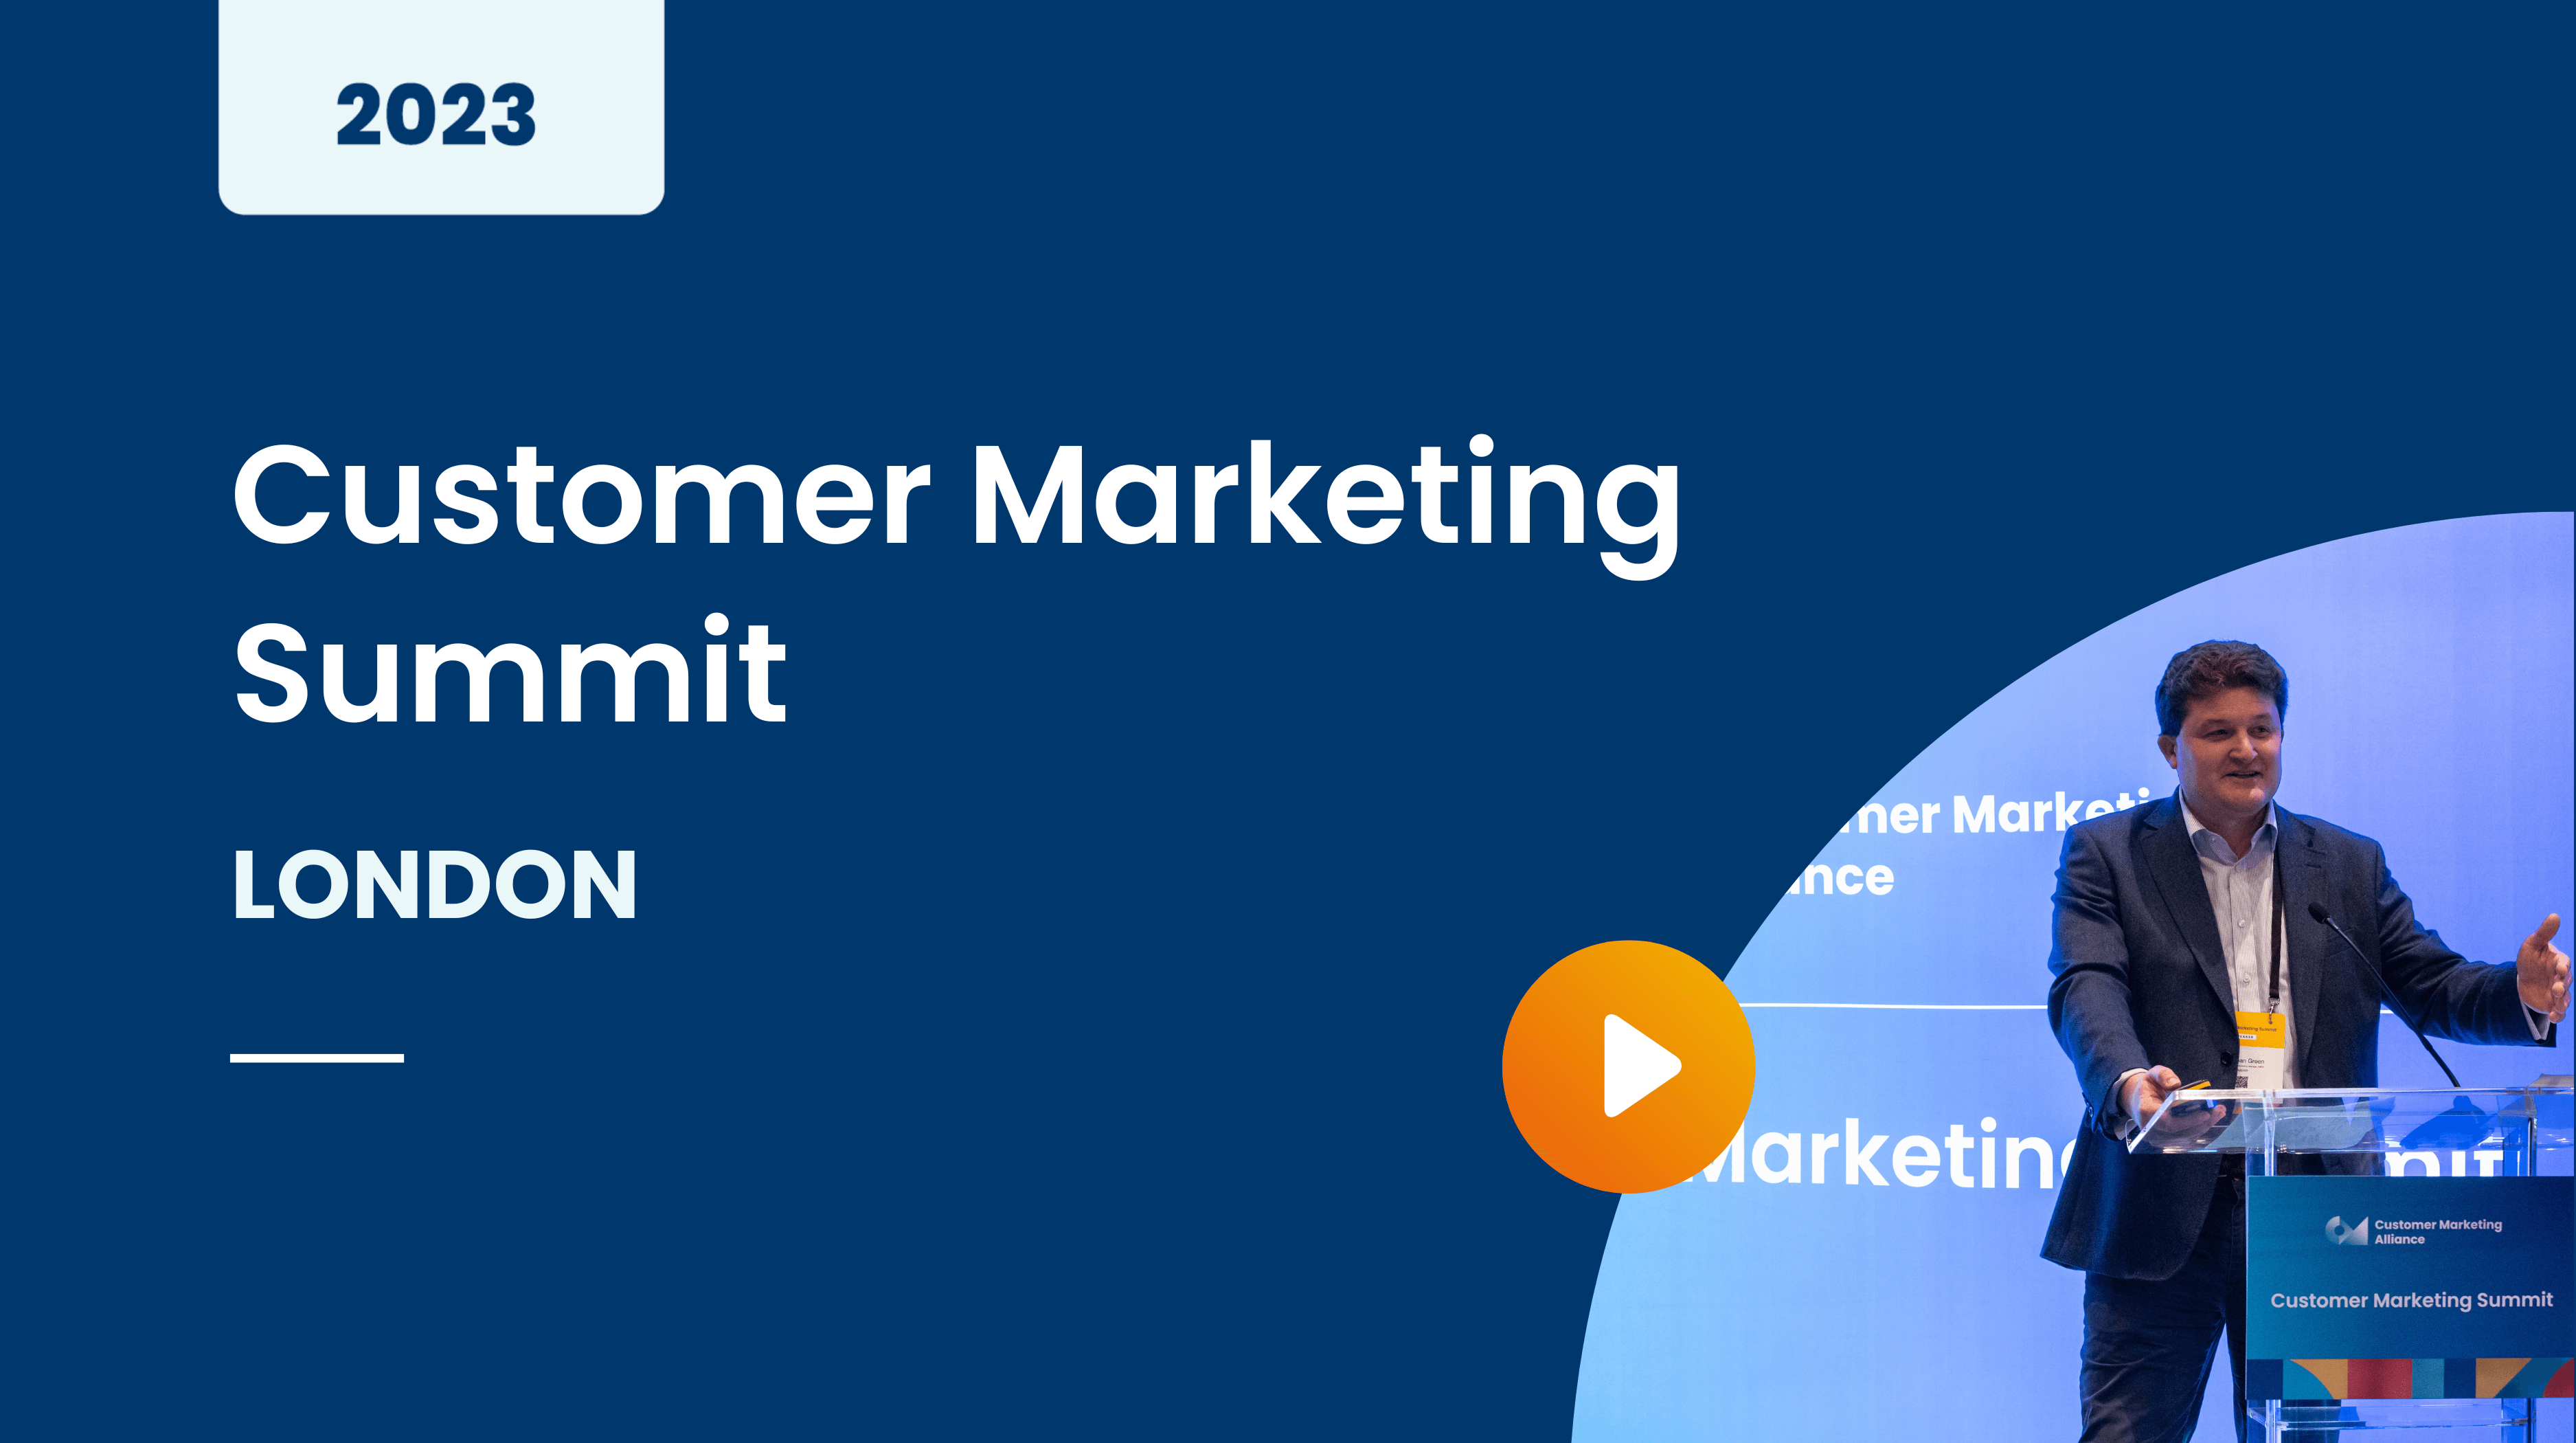 Customer Marketing Summit London 2023